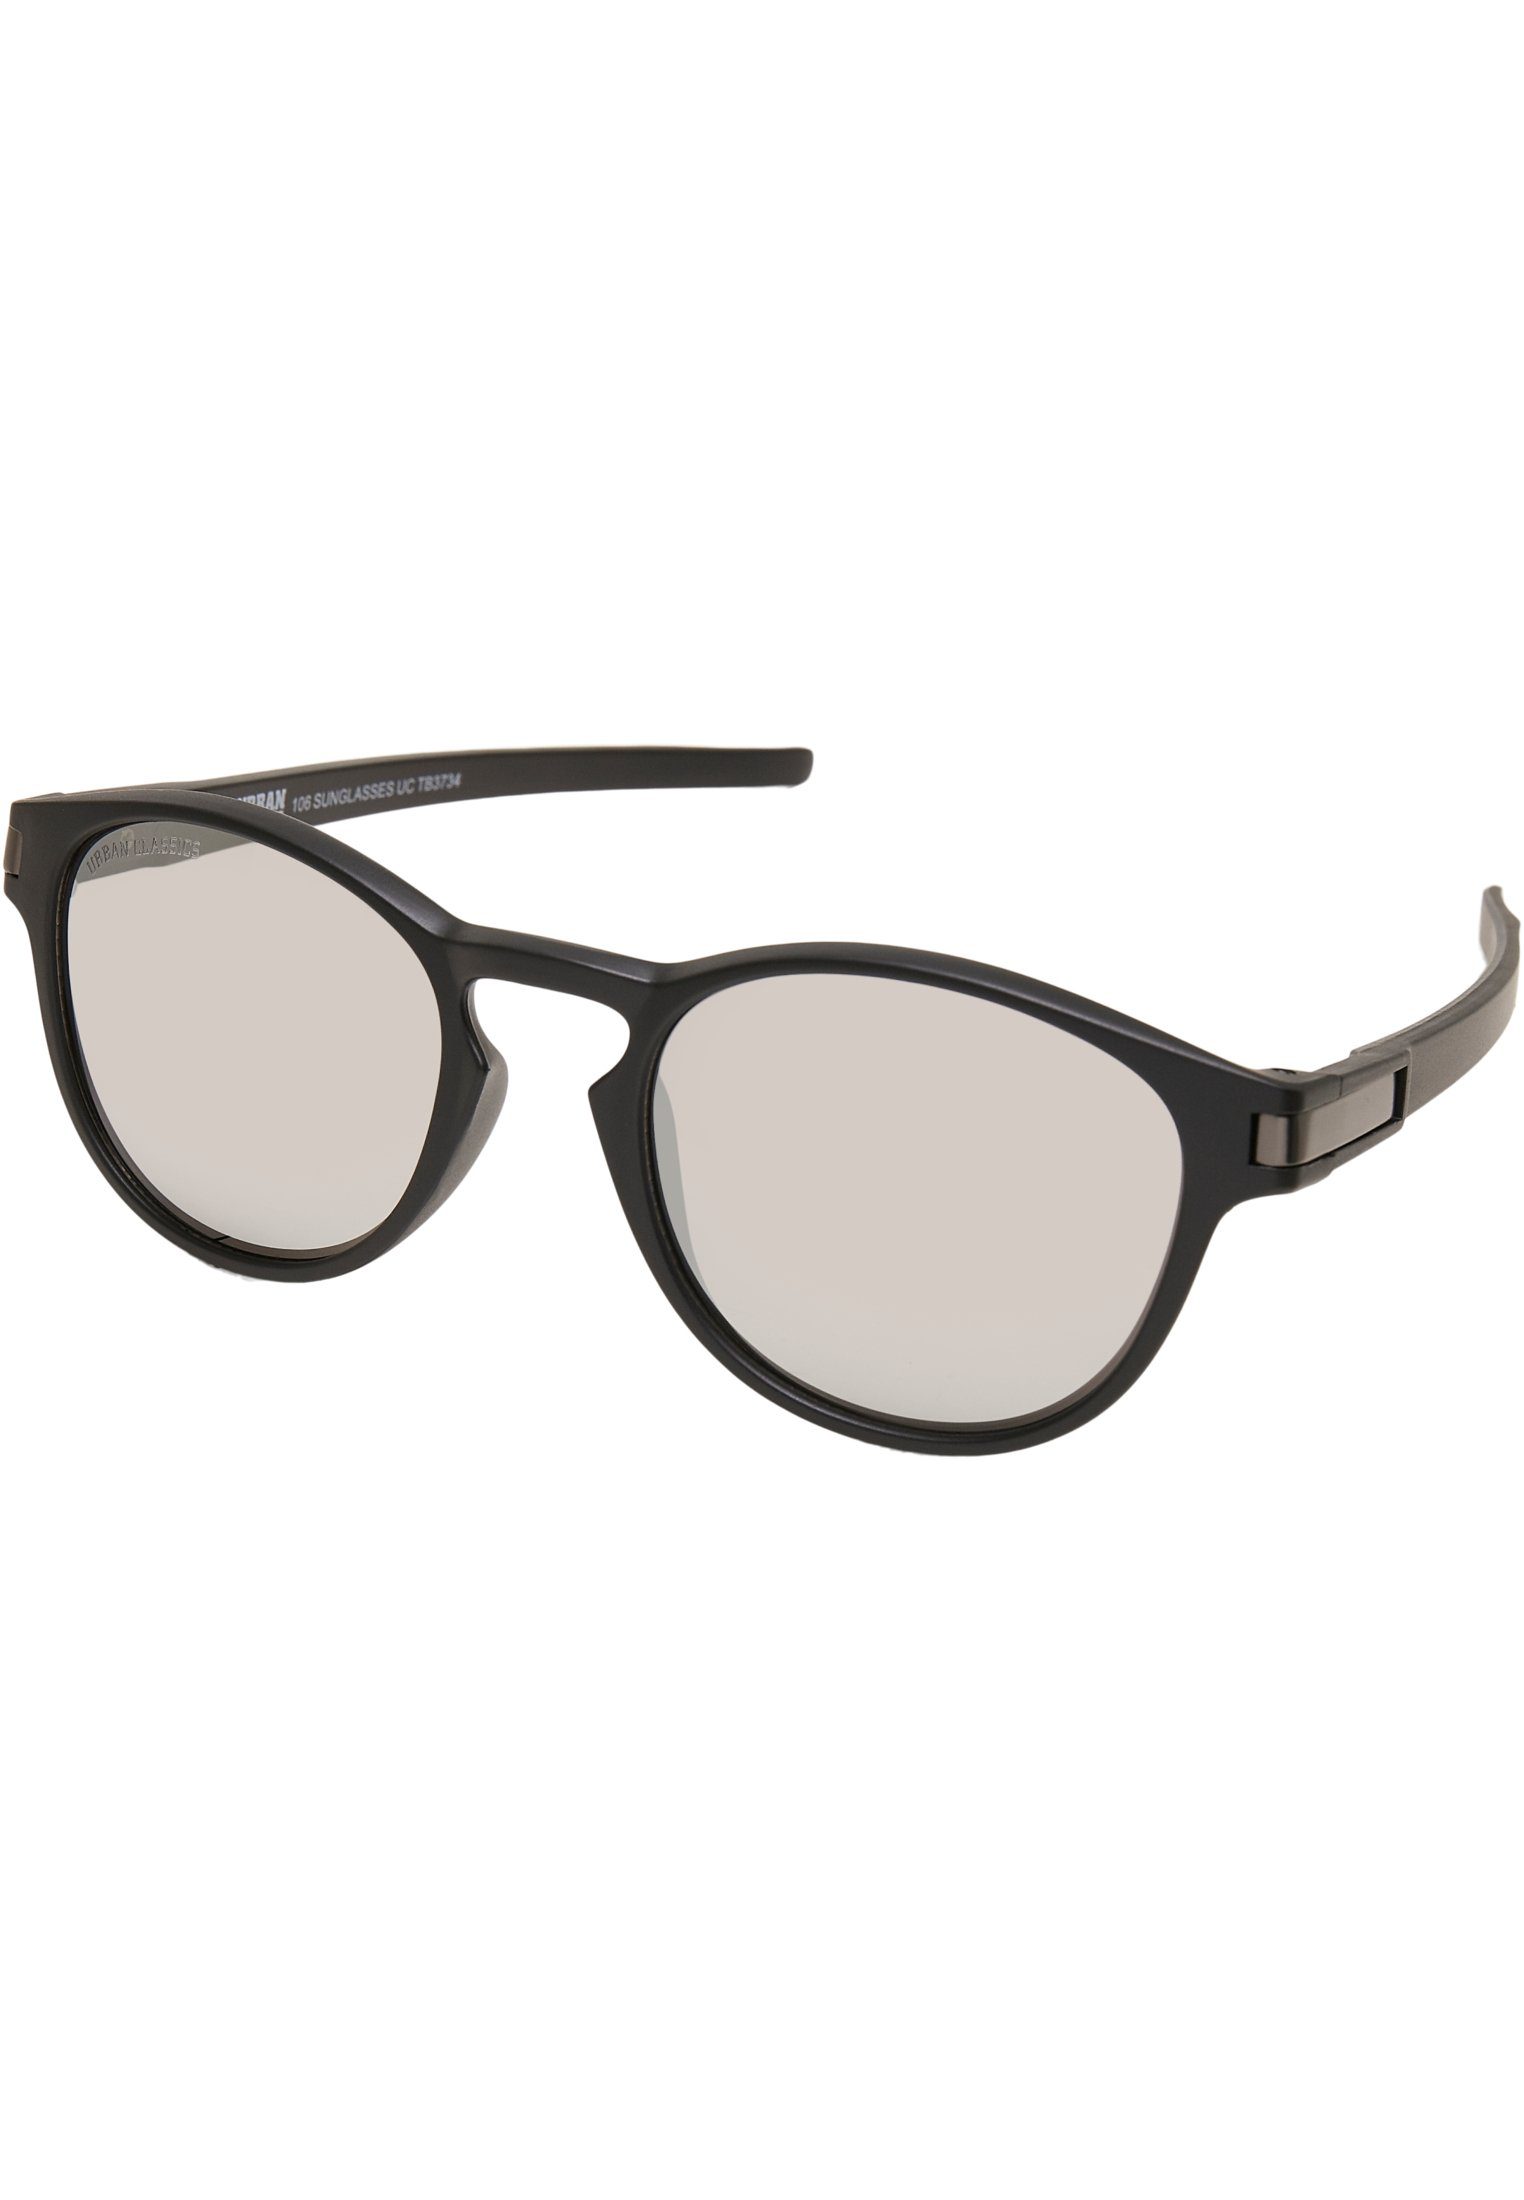 URBAN CLASSICS Sonnenbrille Accessoires 106 black/silver Sunglasses UC